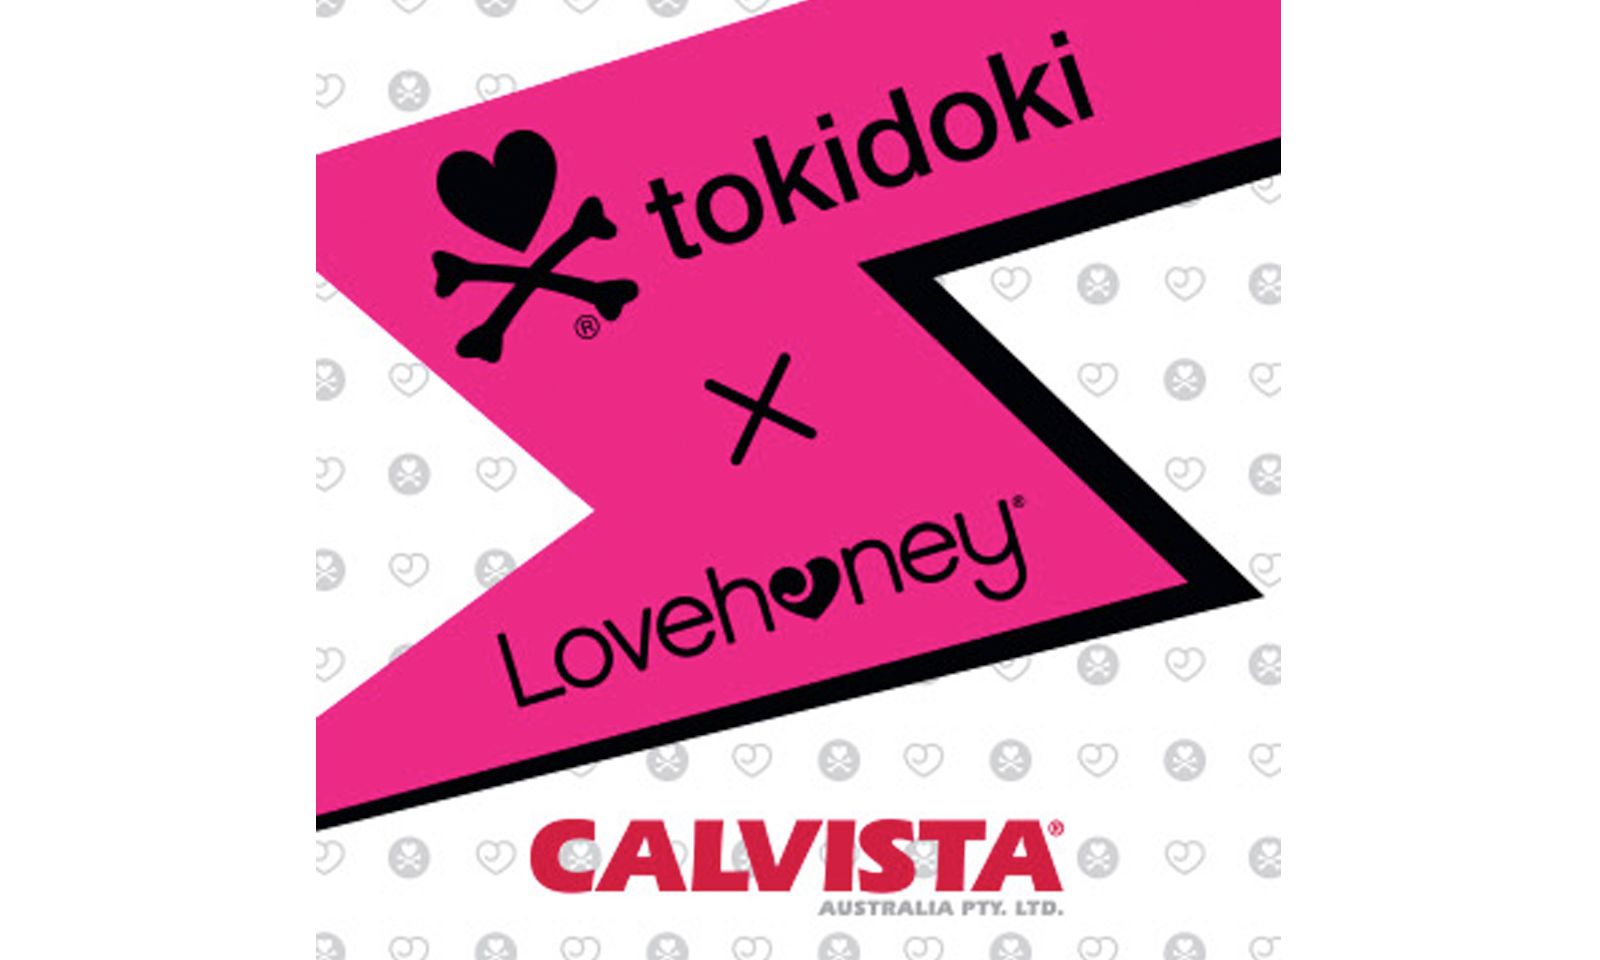 Lovehoney, Calvista Team To Help Retailers With Window Displays